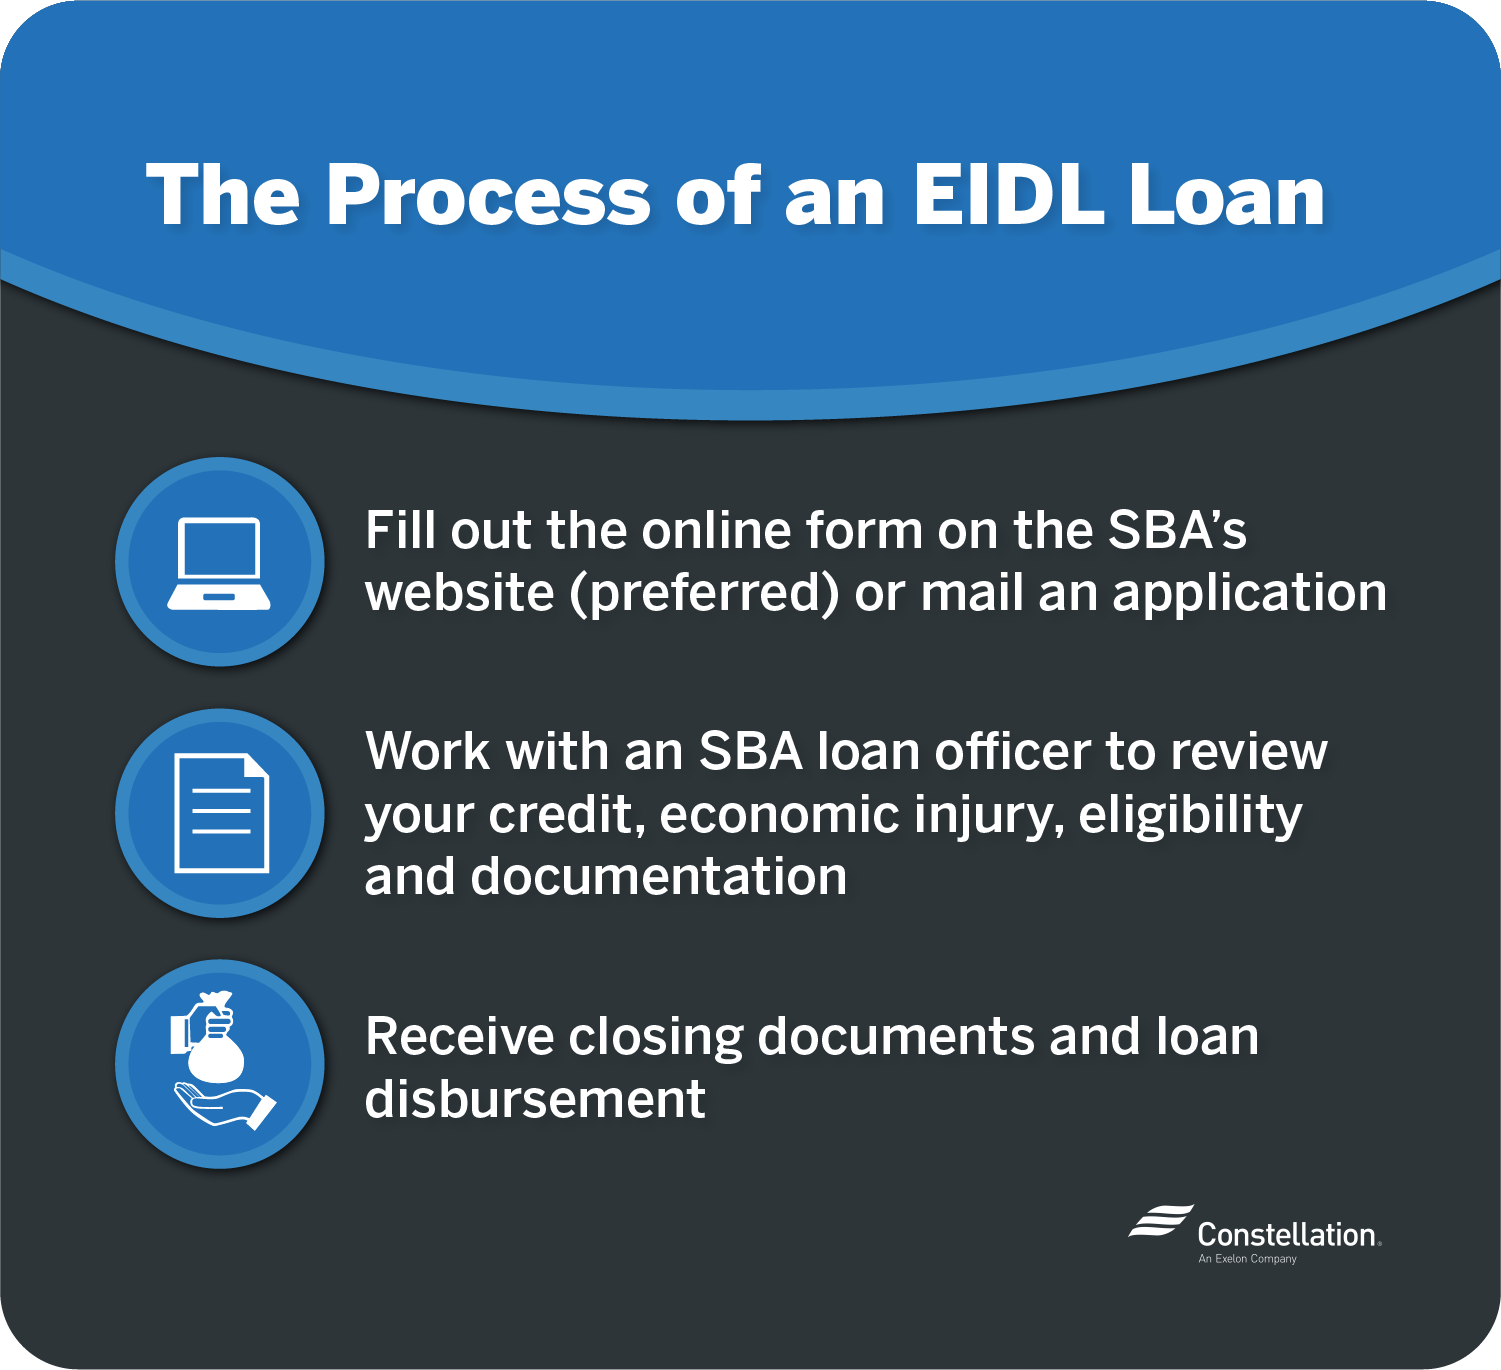 Process of an EIDL loan